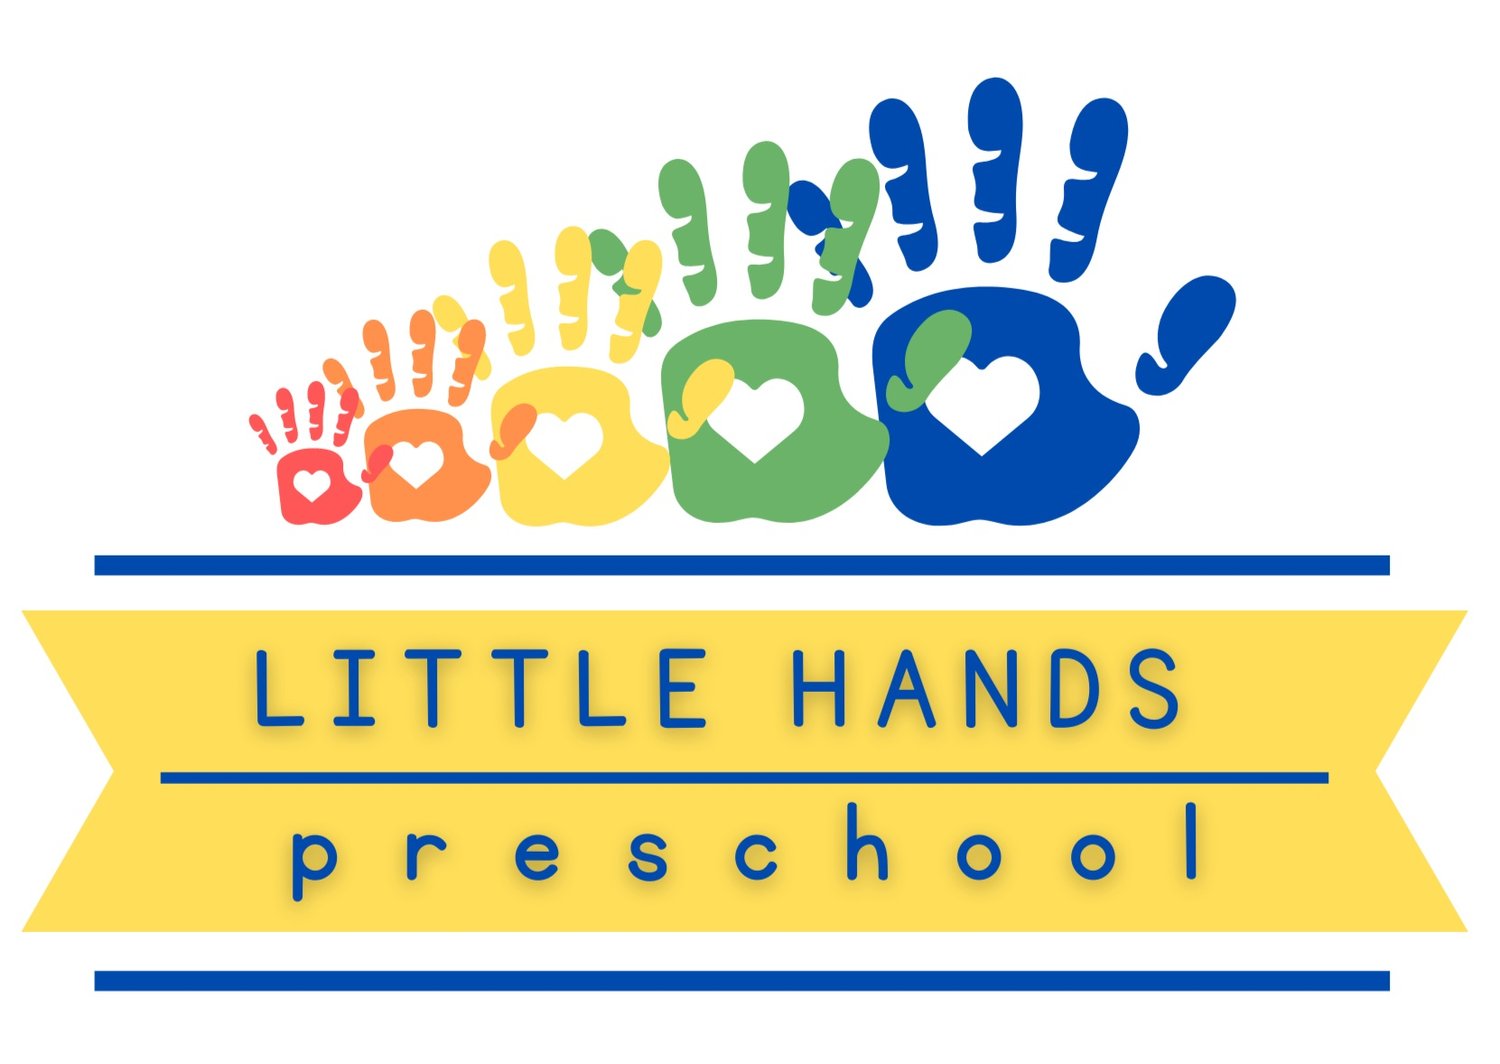 LITTLE HANDS PRESCHOOL